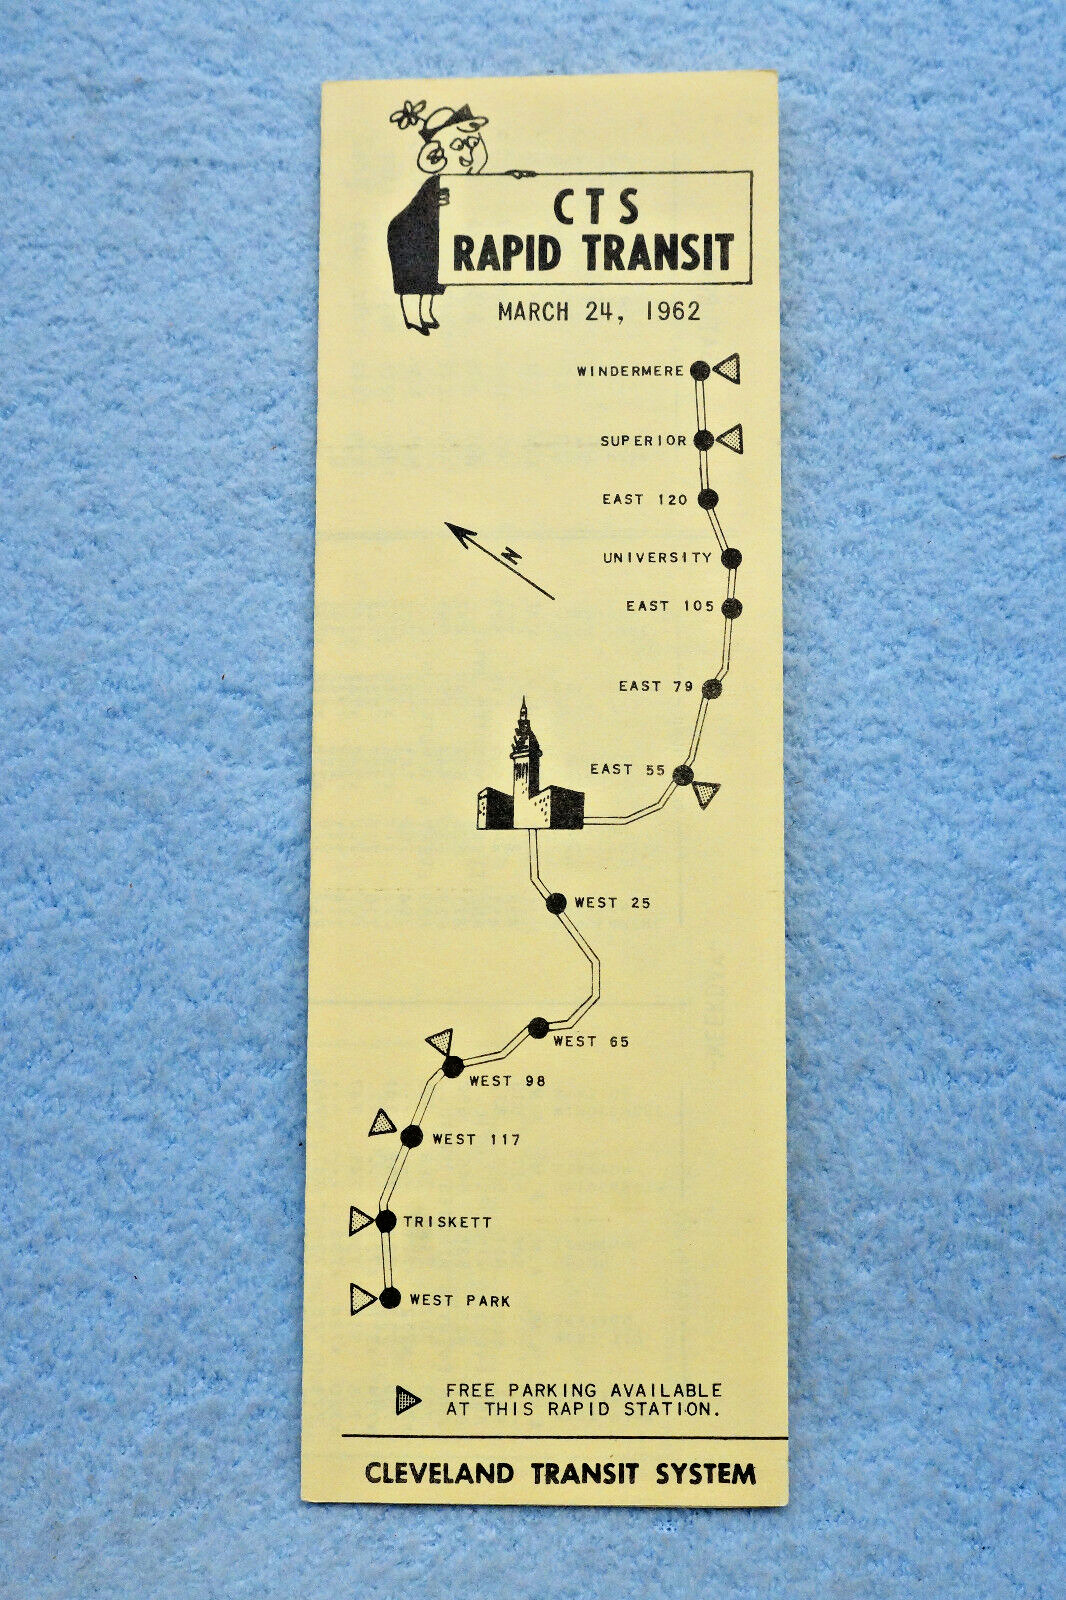 CTS Rapid Transit ( Cleveland Transit System) Timetable - Mar 24, 1962